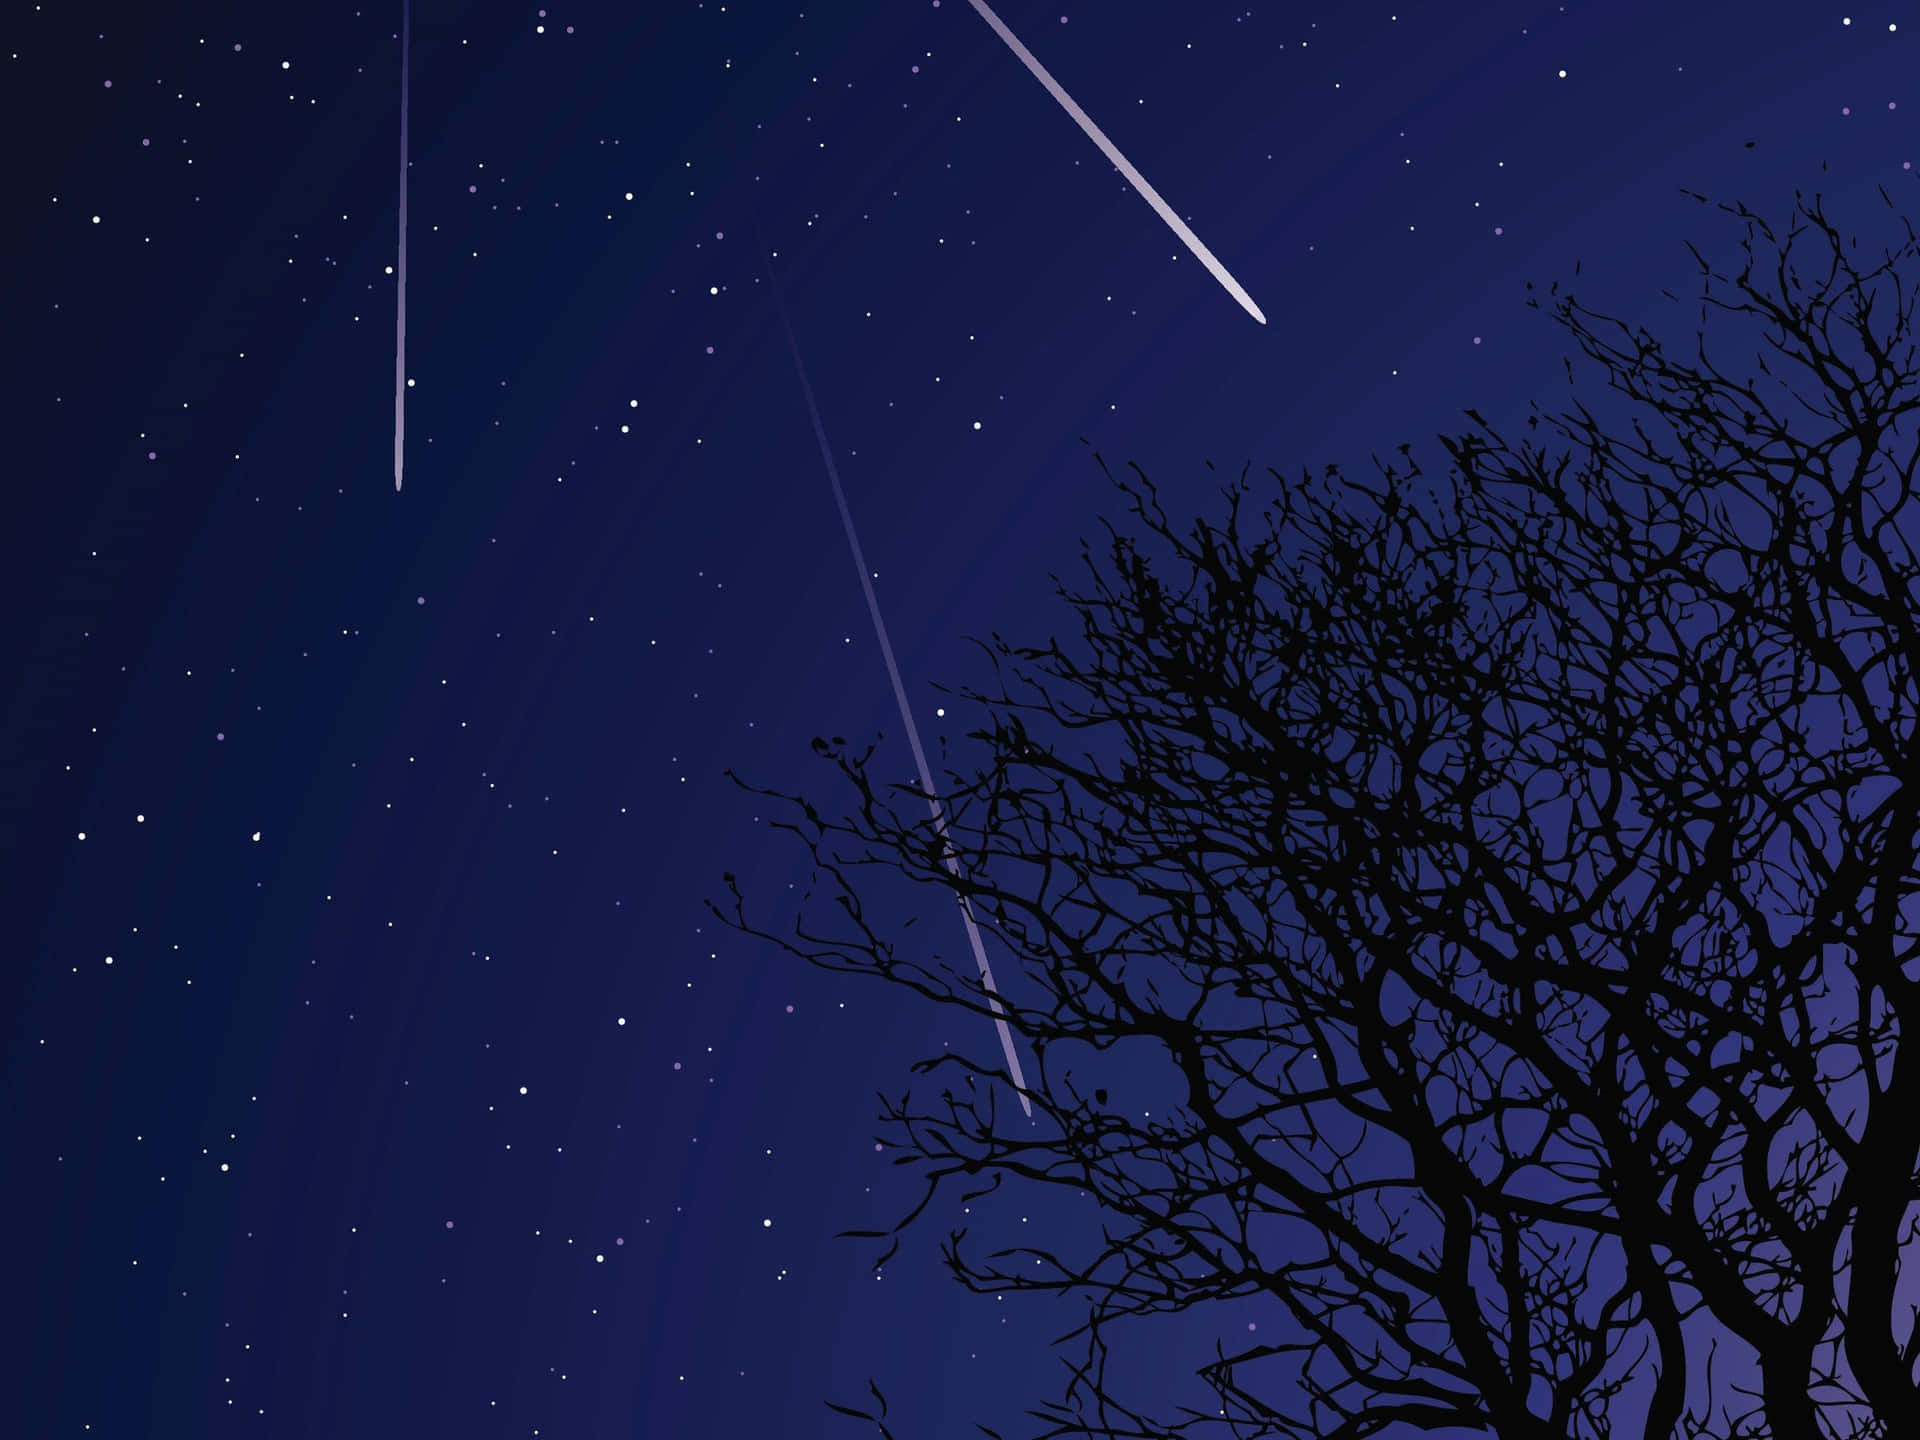 A brilliant set of meteors streak across the night sky